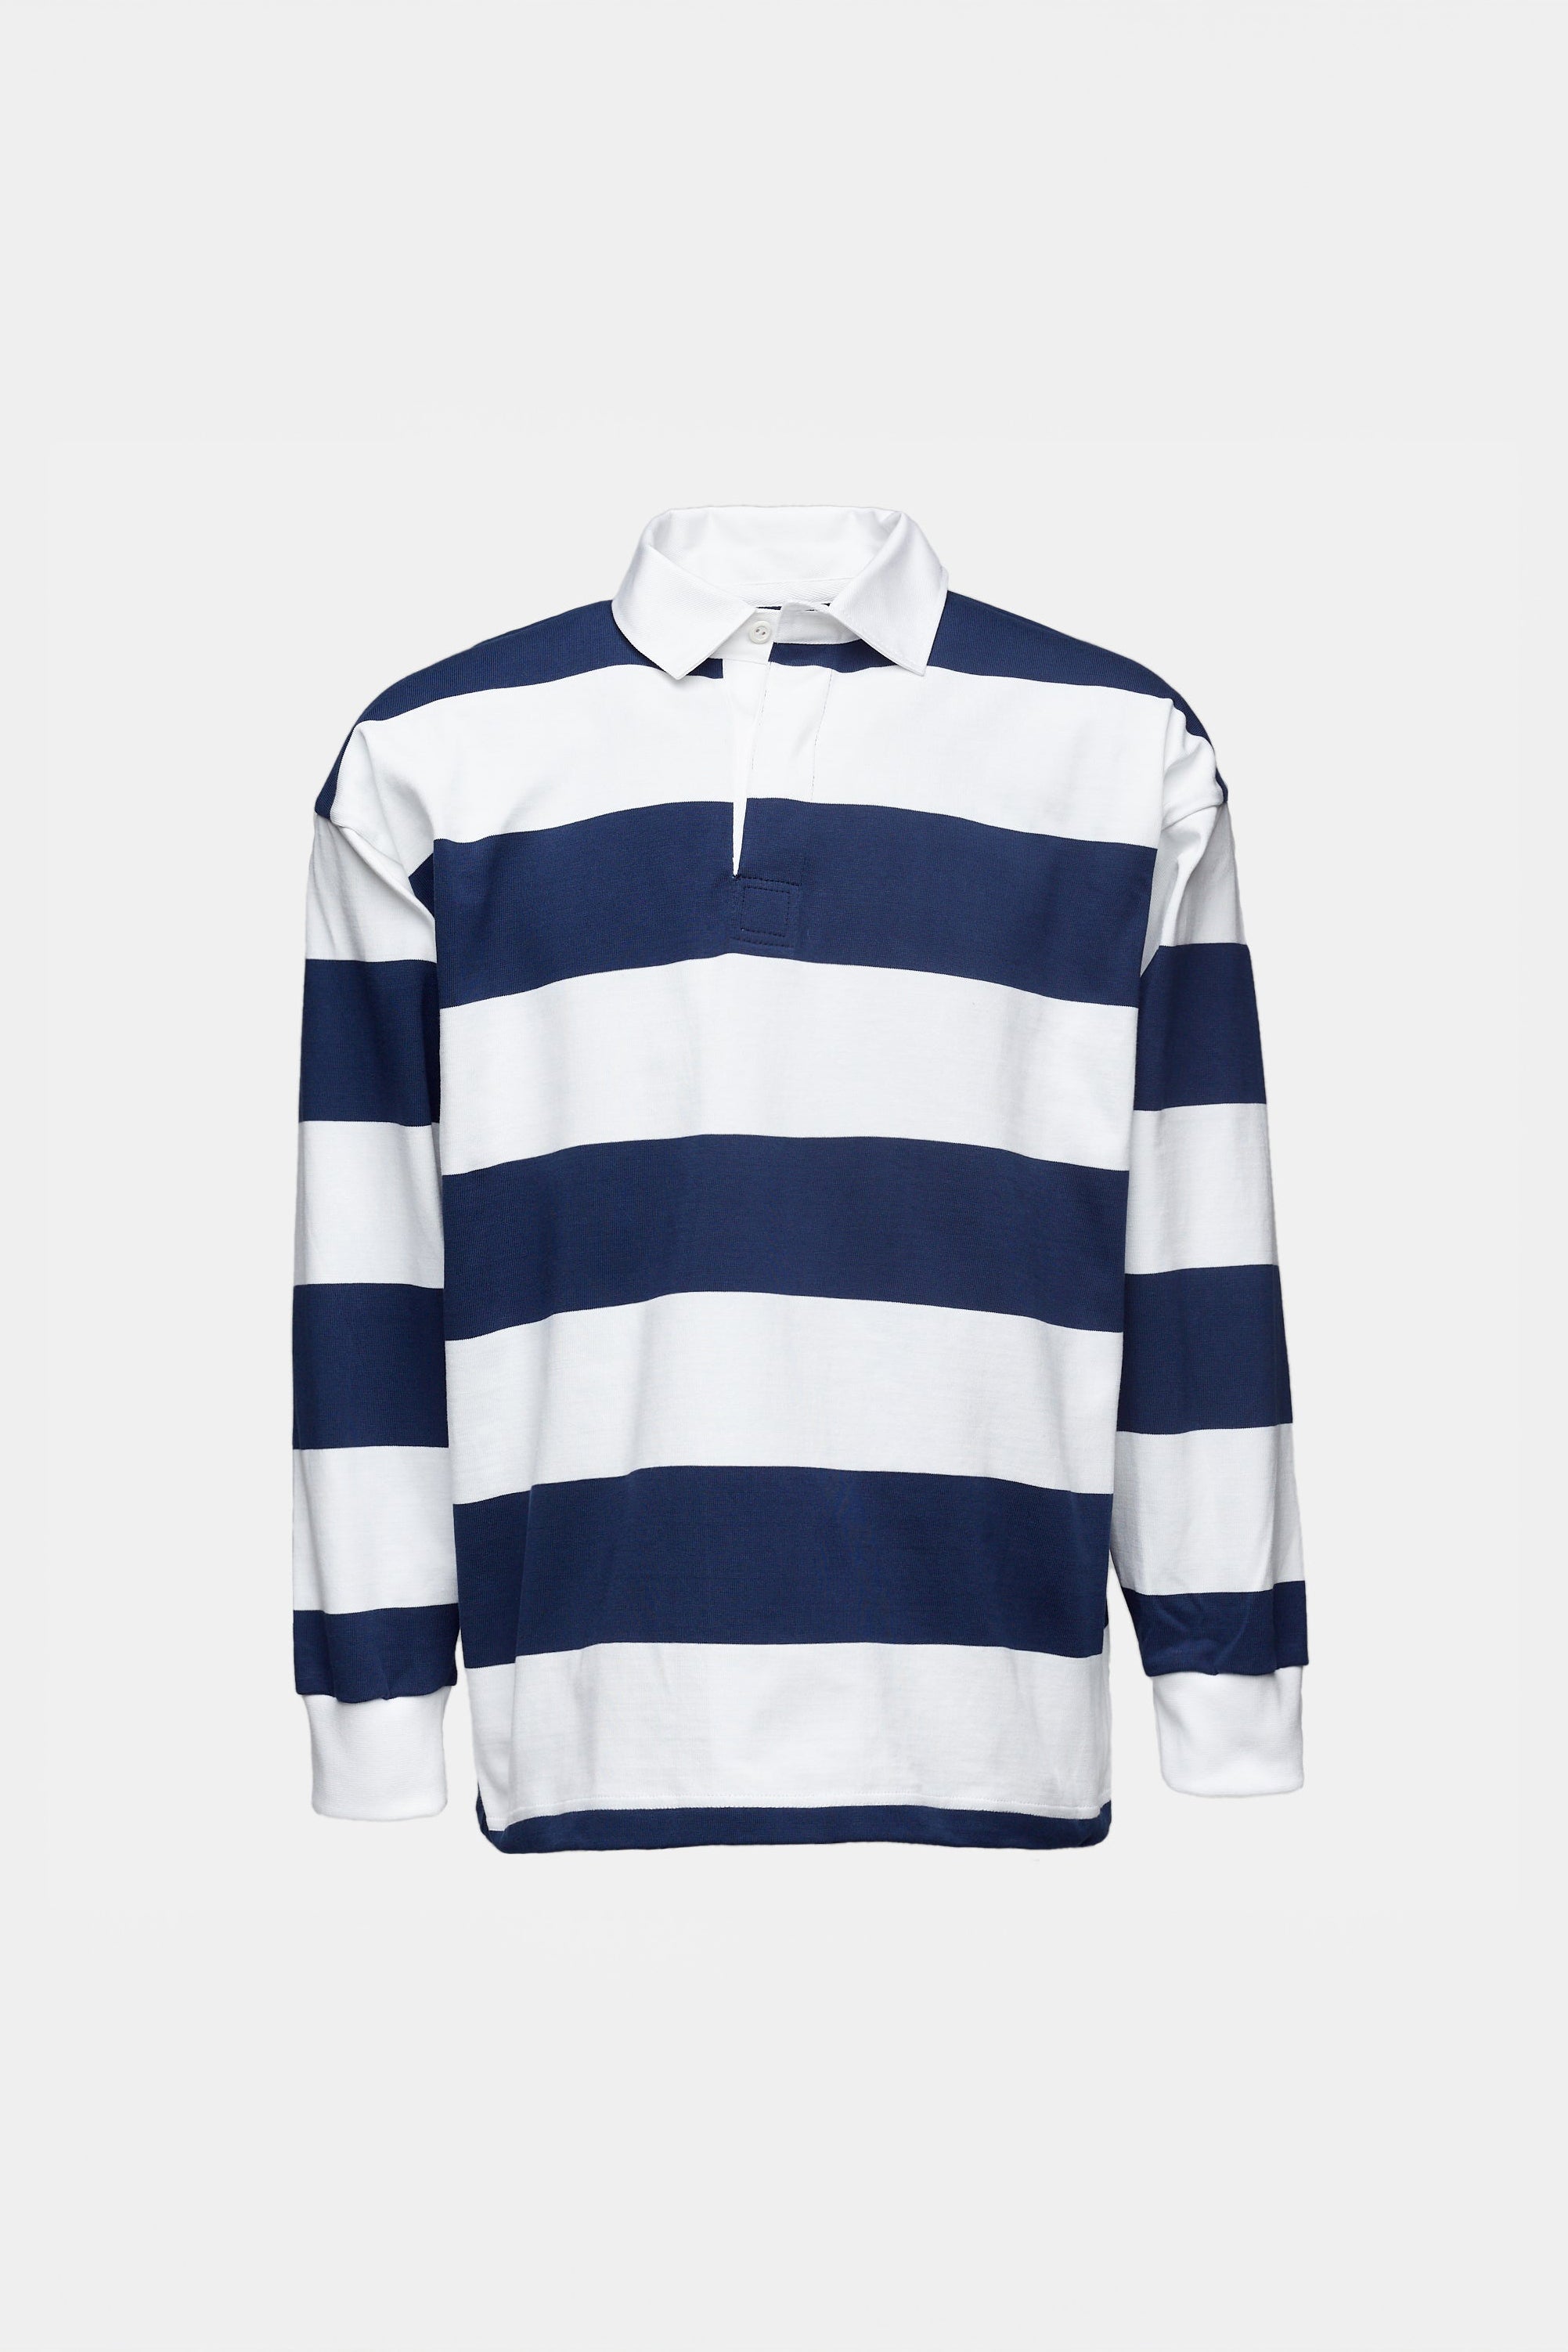 Male_Wider-Stripe-Rugby-Shirt_Navy-White_Mannequin